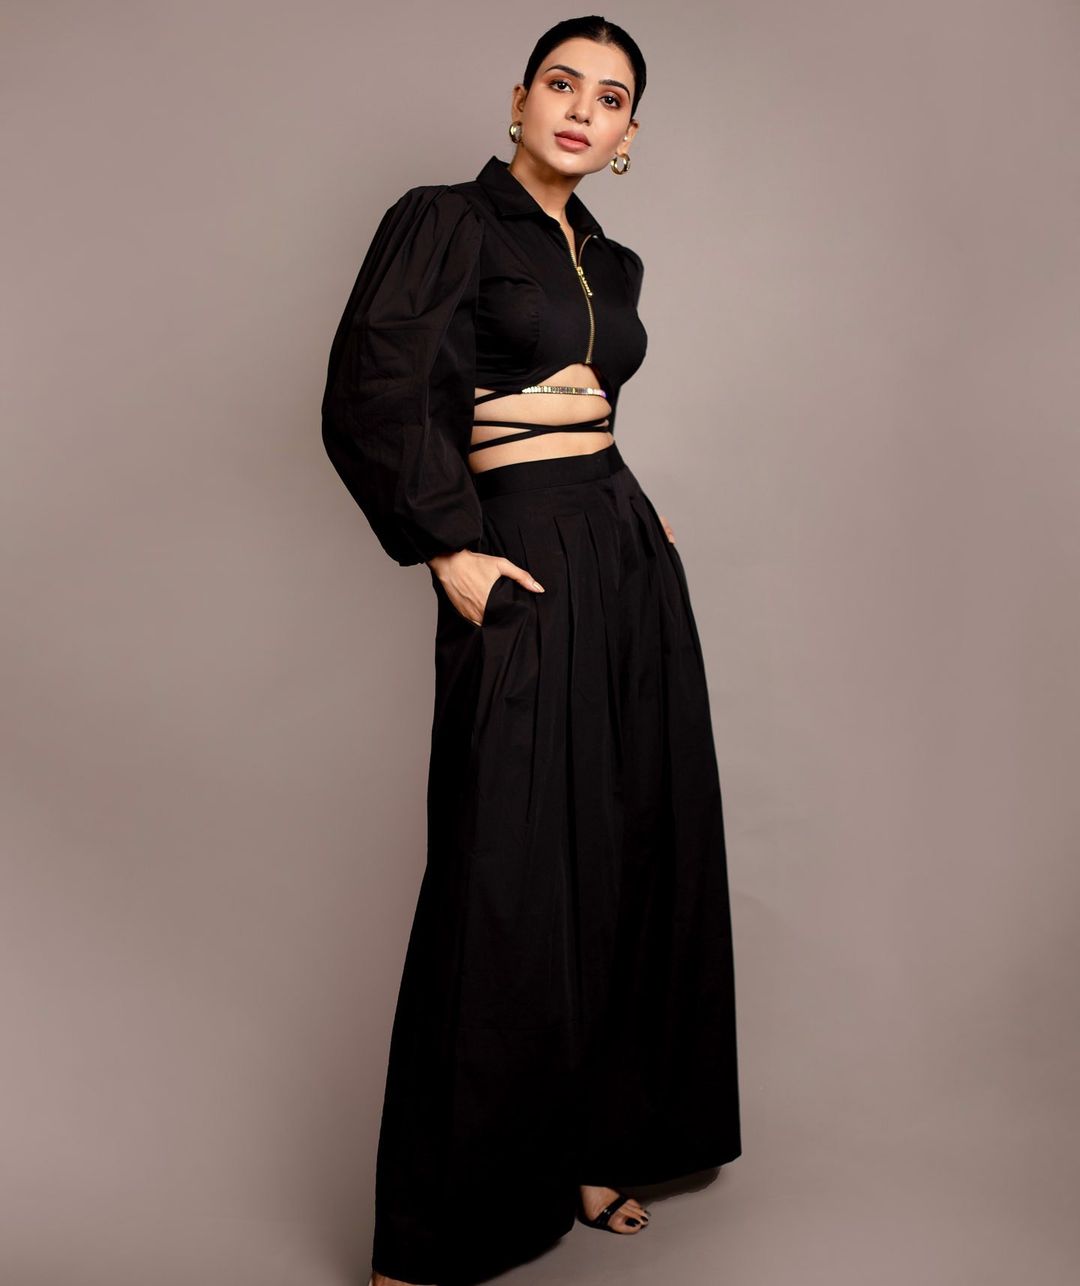 Sraboni Choco on X: The boss lady @Samanthaprabhu2 New Outfit for  #TheFamilyManSeason2 promotion in Mumbai.. #SamanthaAkkineni #Samantha  #SamanthaRuthPrabhu #SAM #WhoIsRaji #TheFamilyManOnPrime..   / X